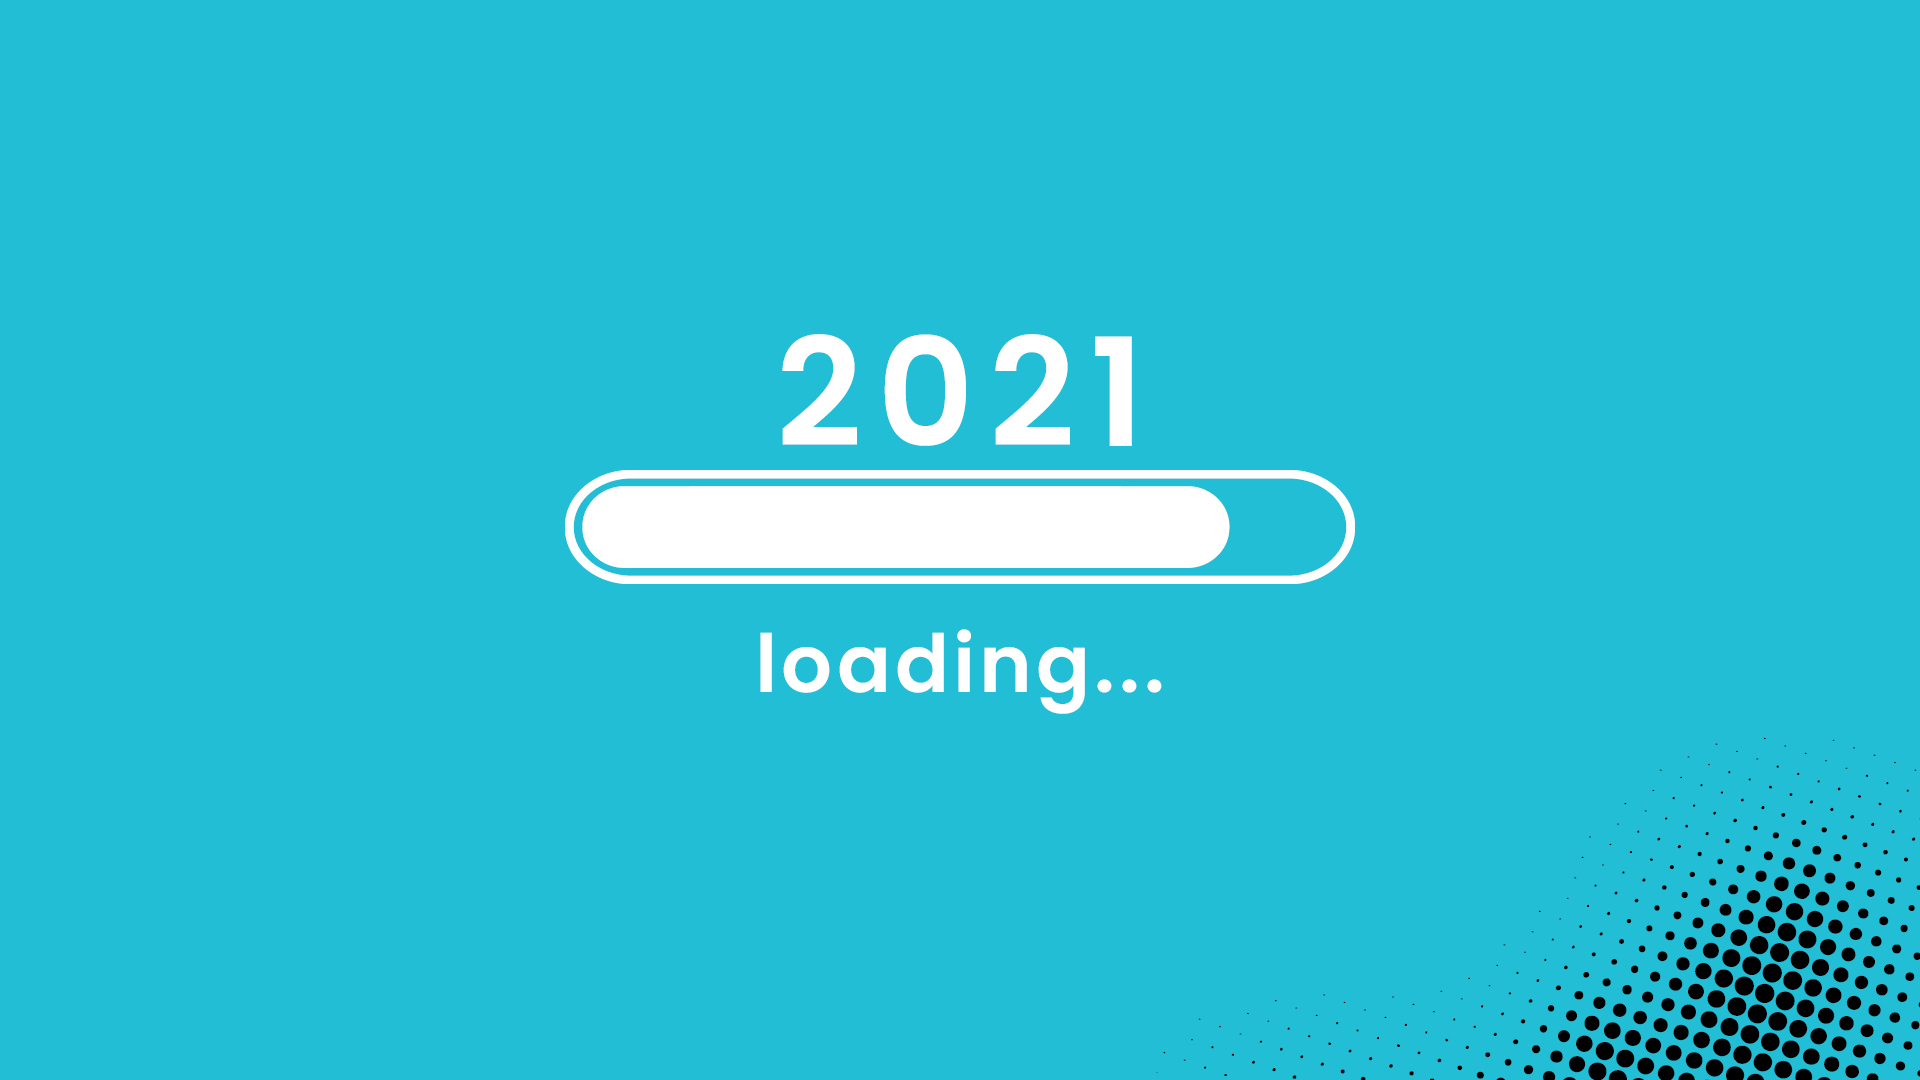 2021 Loading